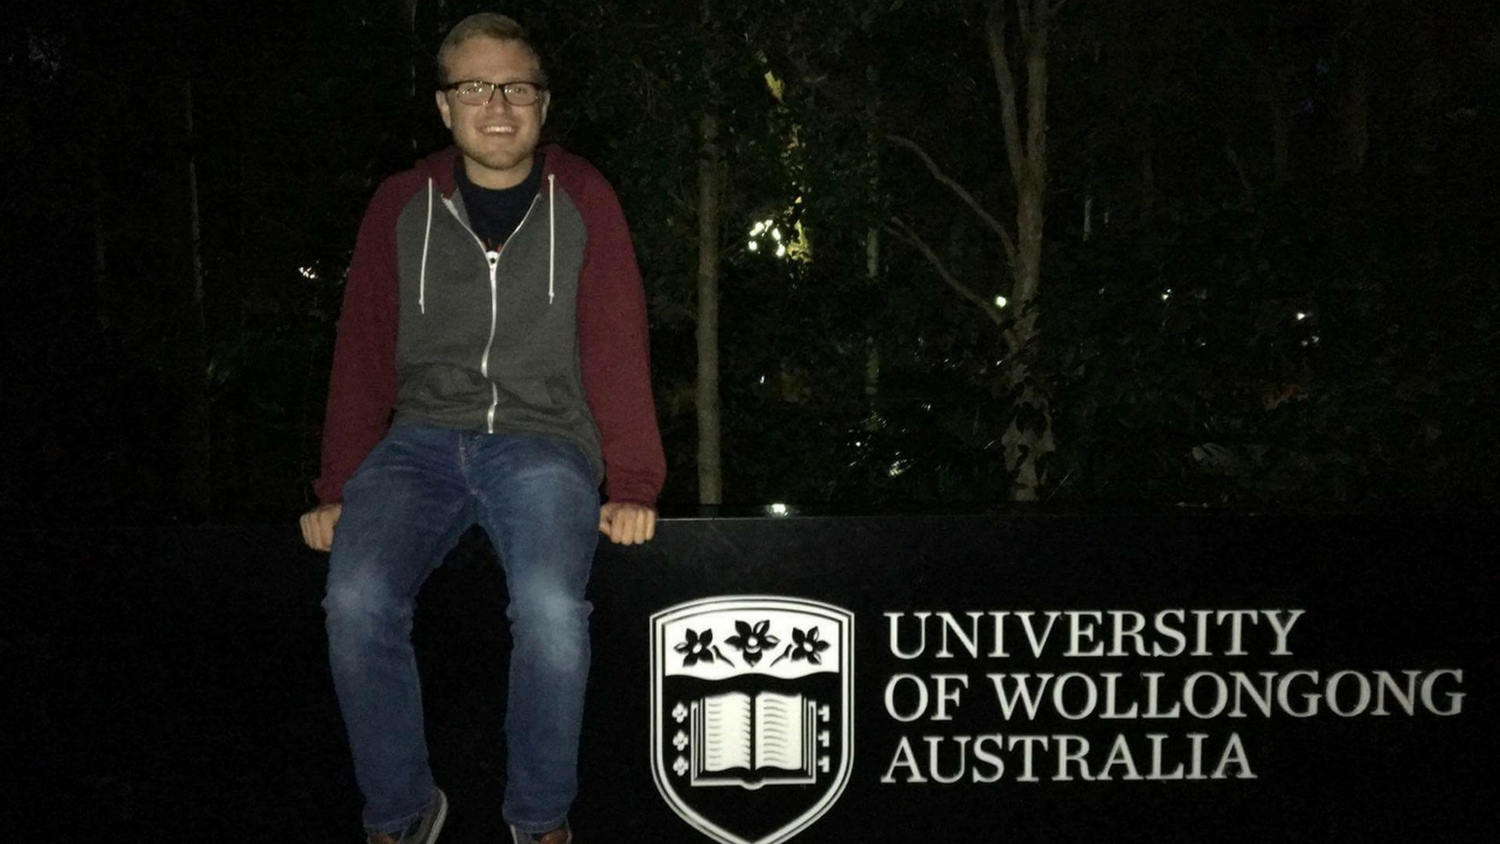 Male student sitting on University of Wollongong Australia sign